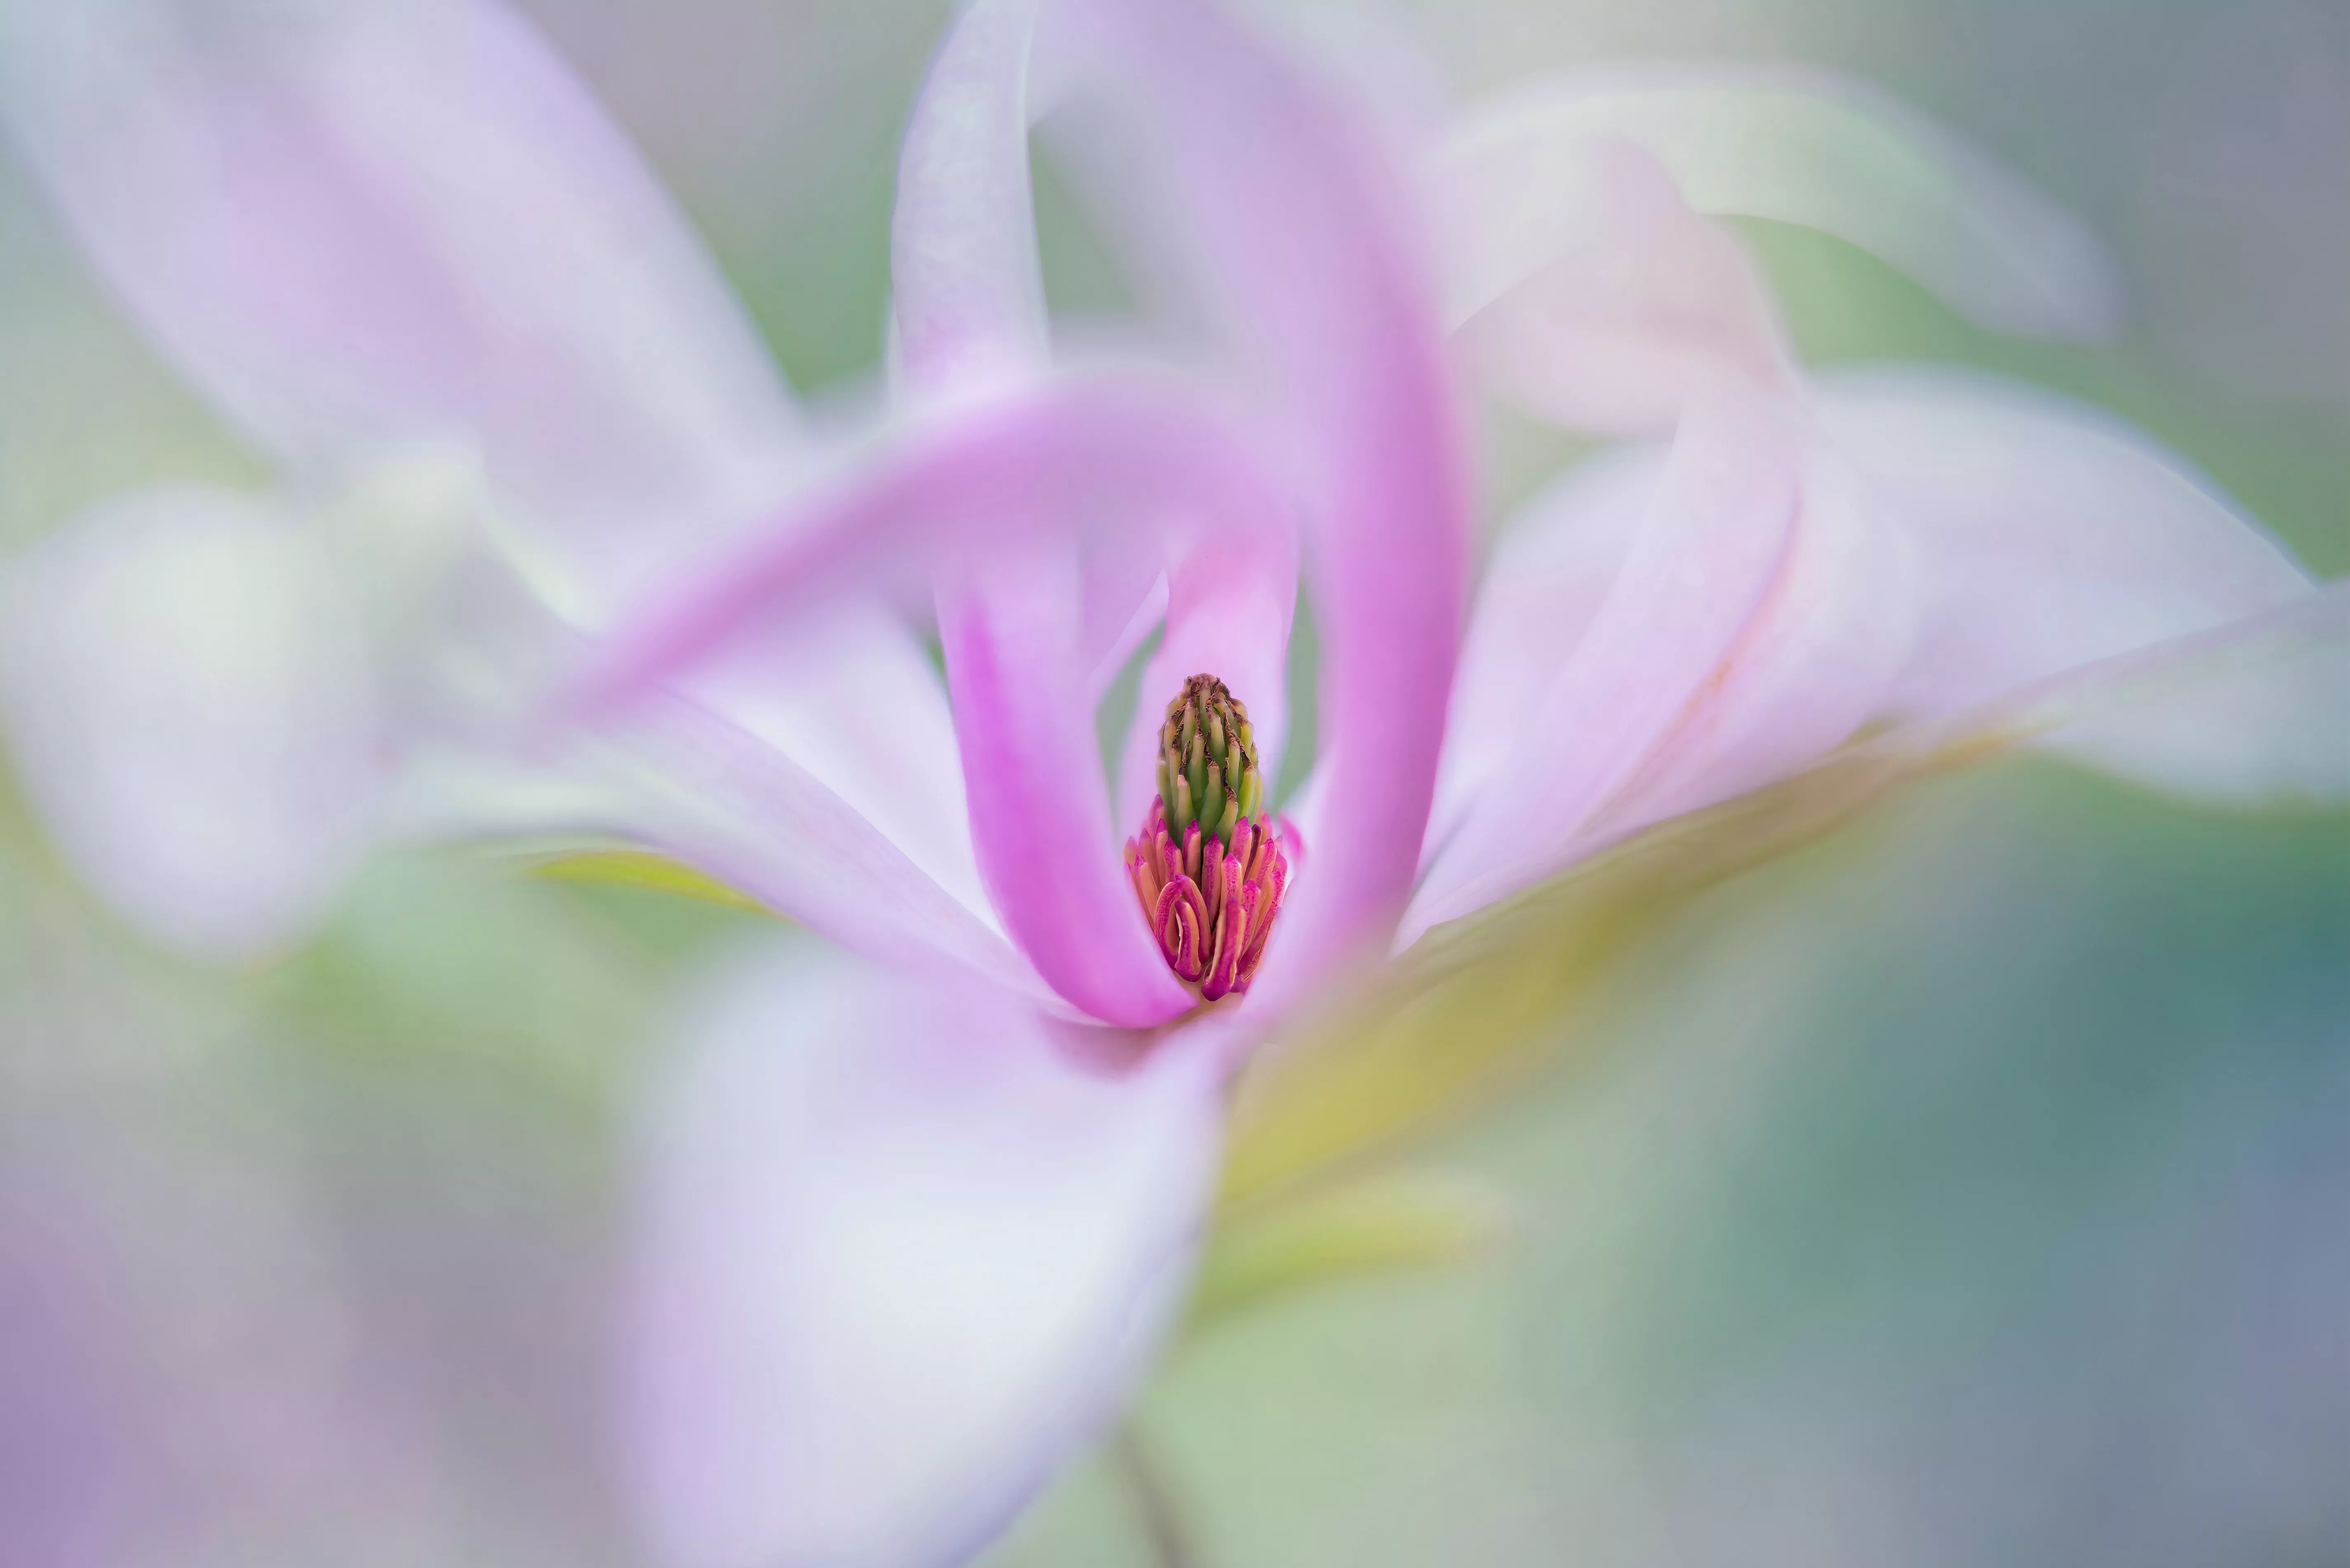 Macro shot of a pink flower